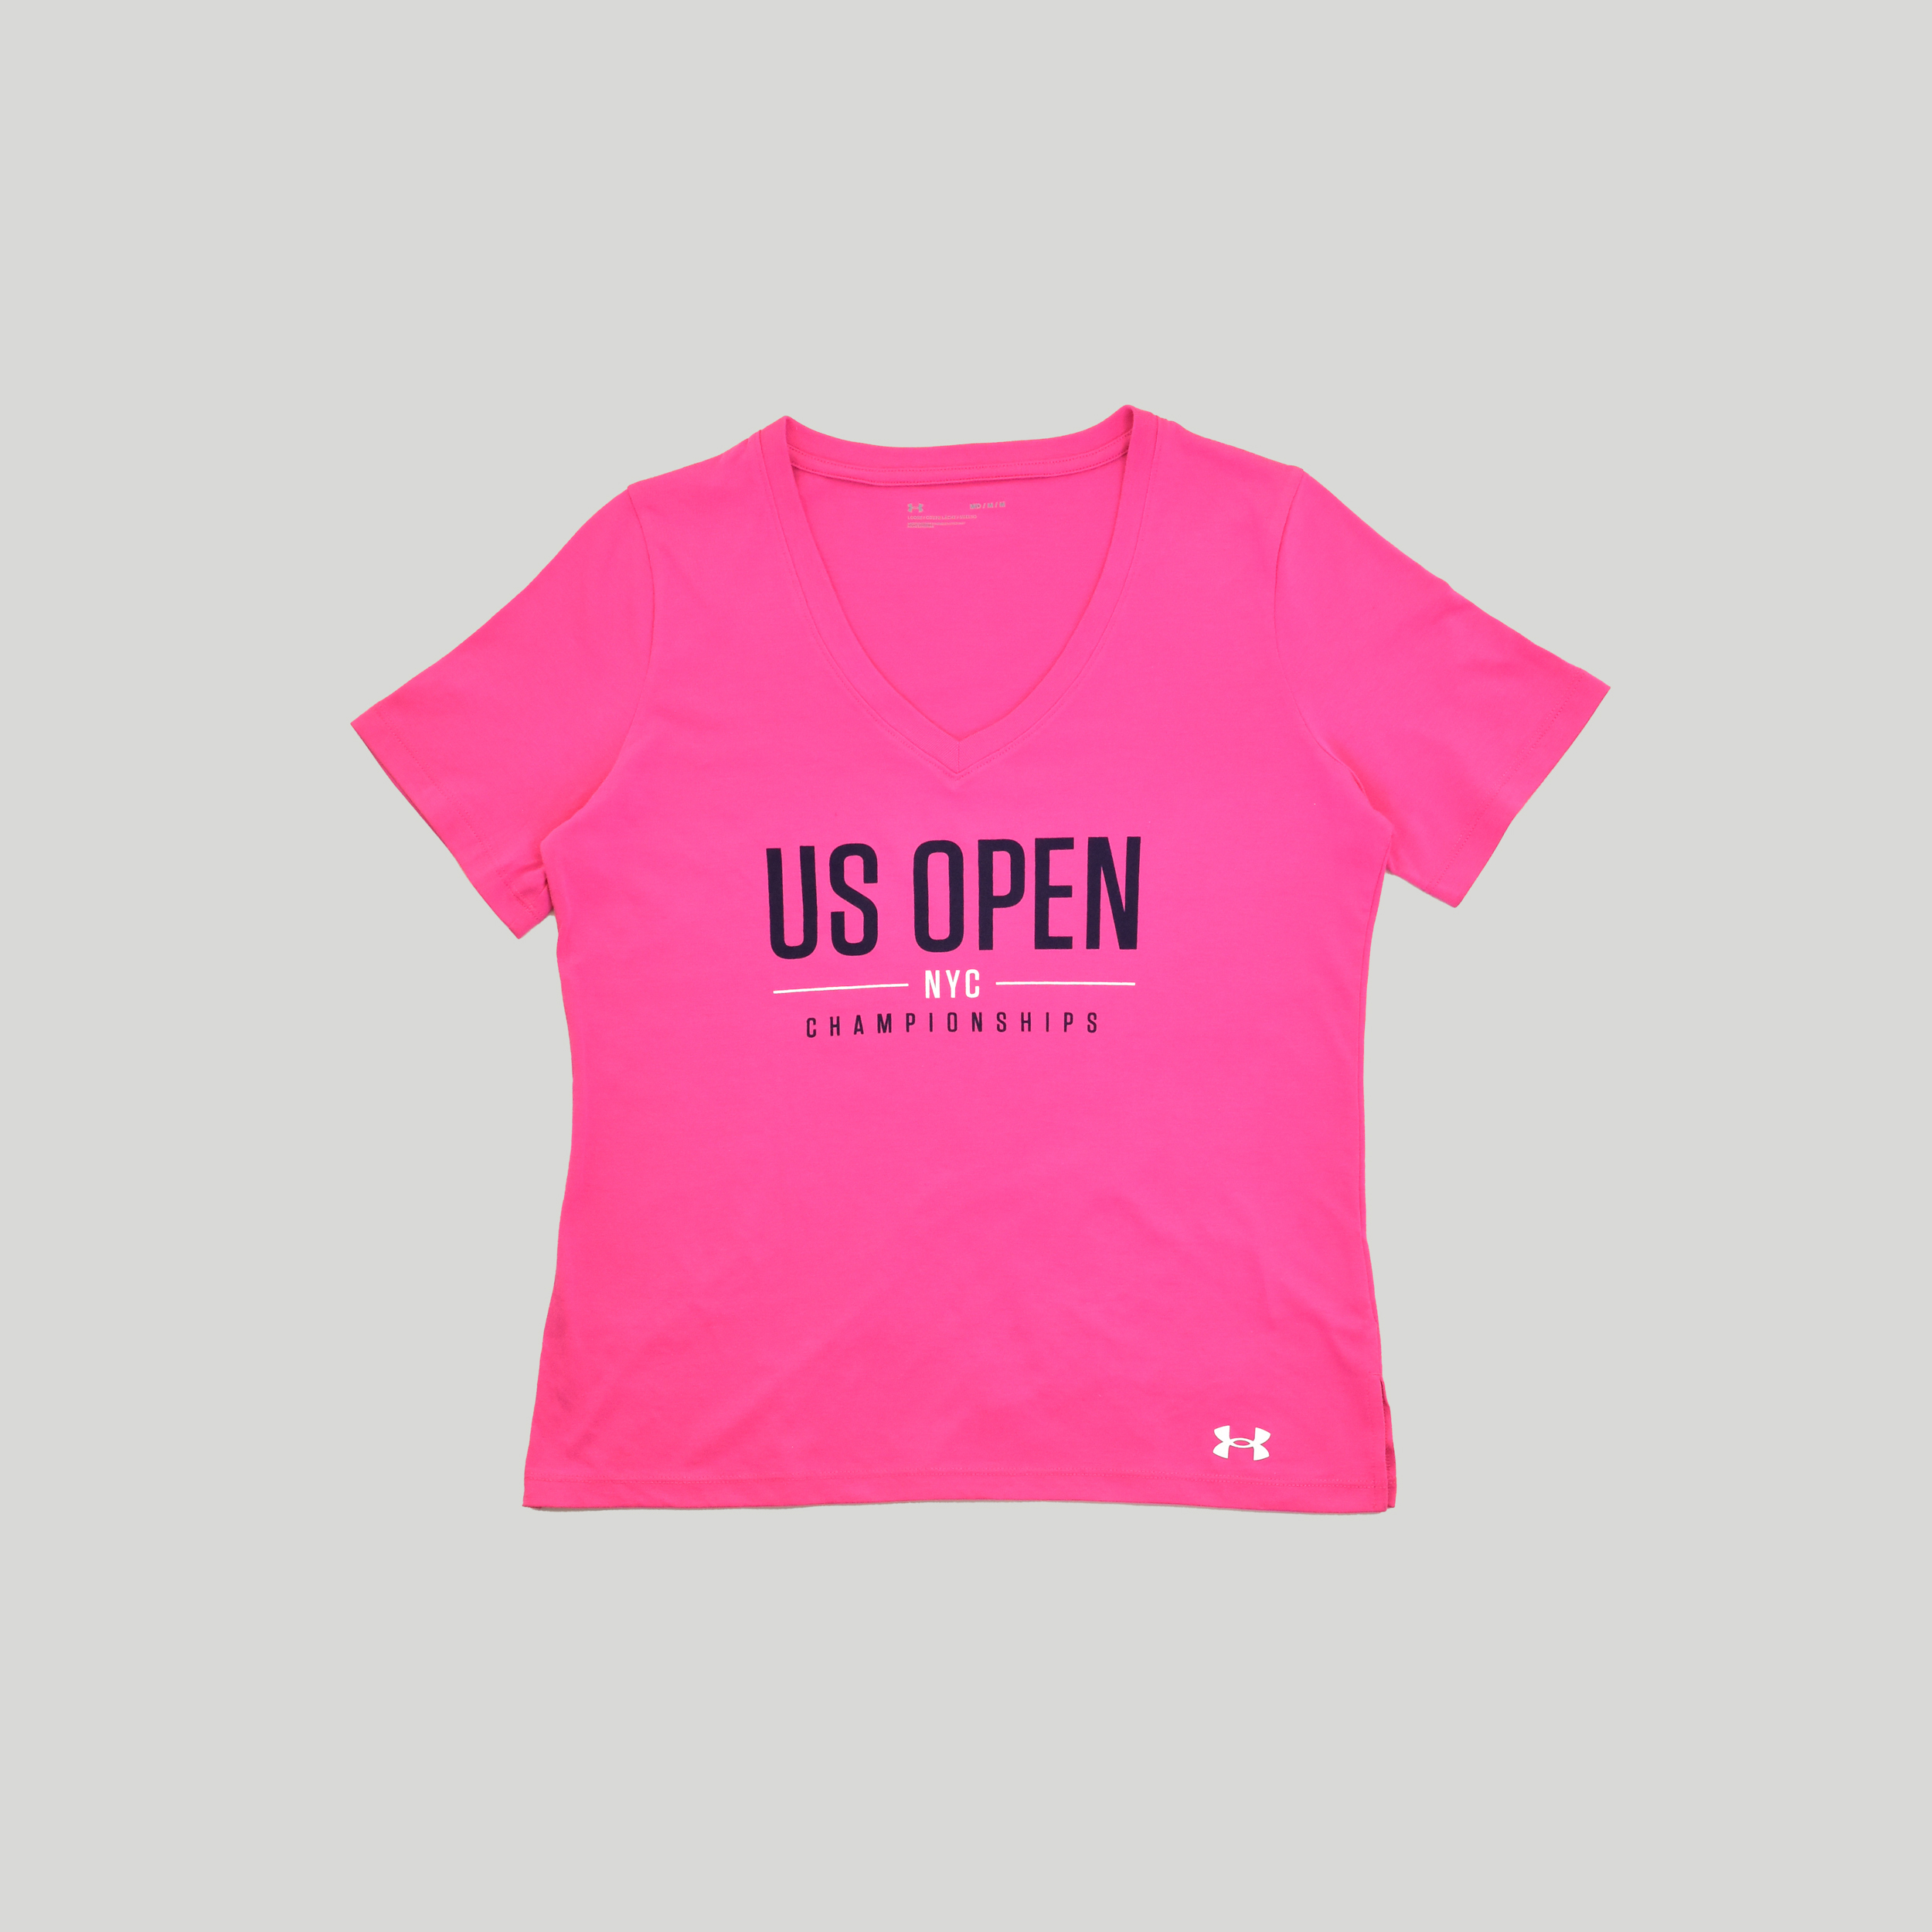 Under Armour Womens Shirt Extra Small Pink Logo Tee Short Sleeve